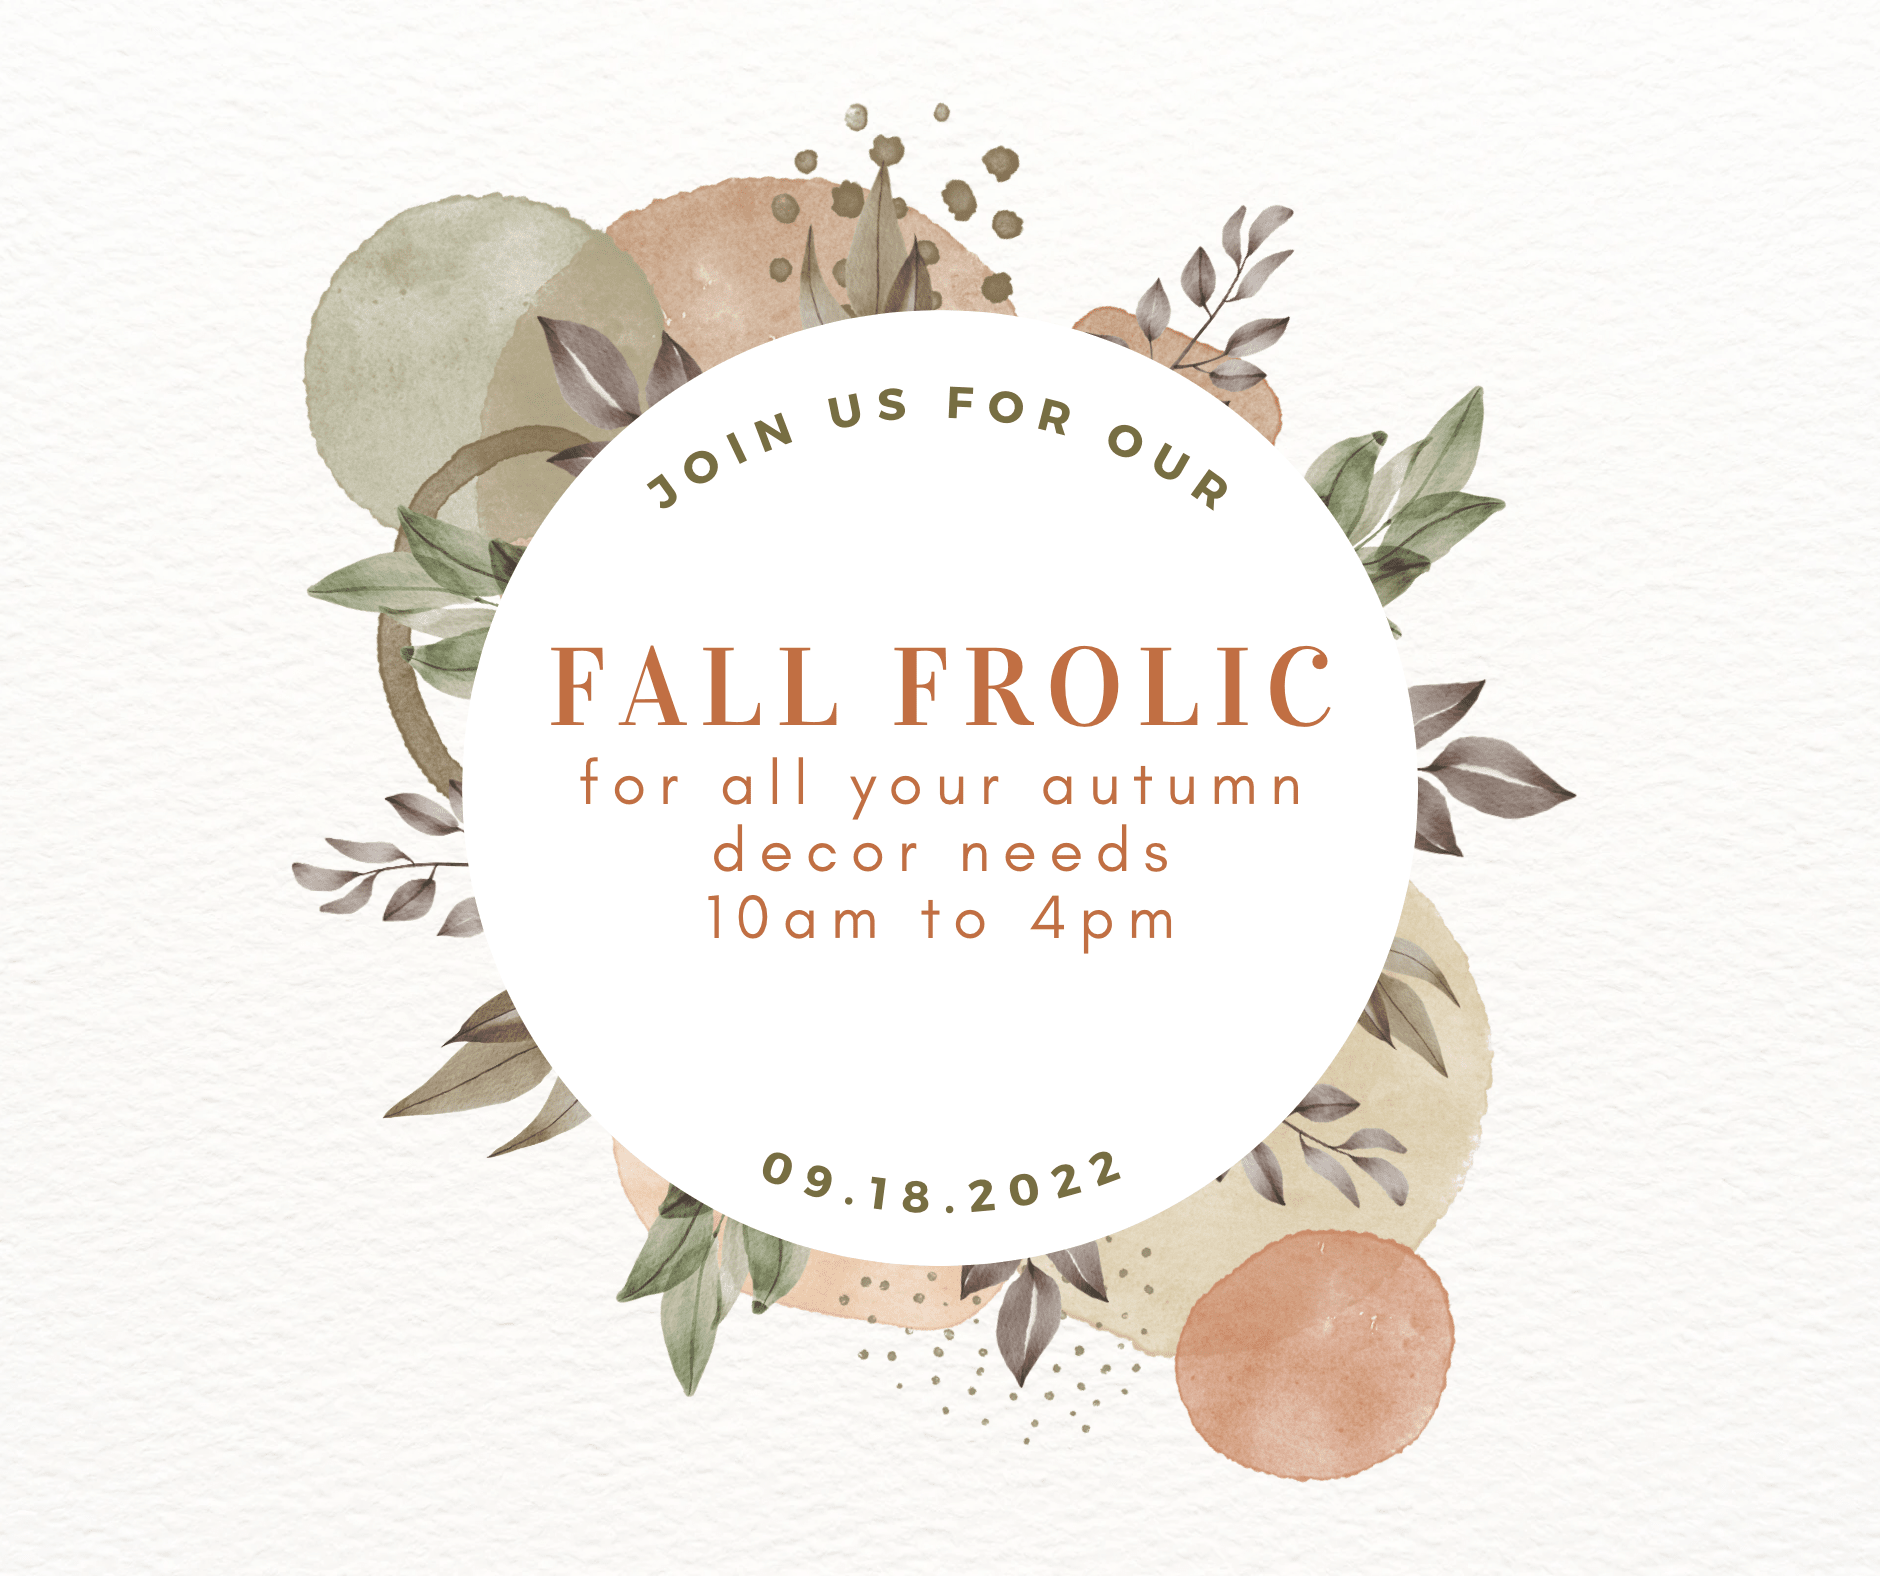 Fall Frolic 10am to 4pm